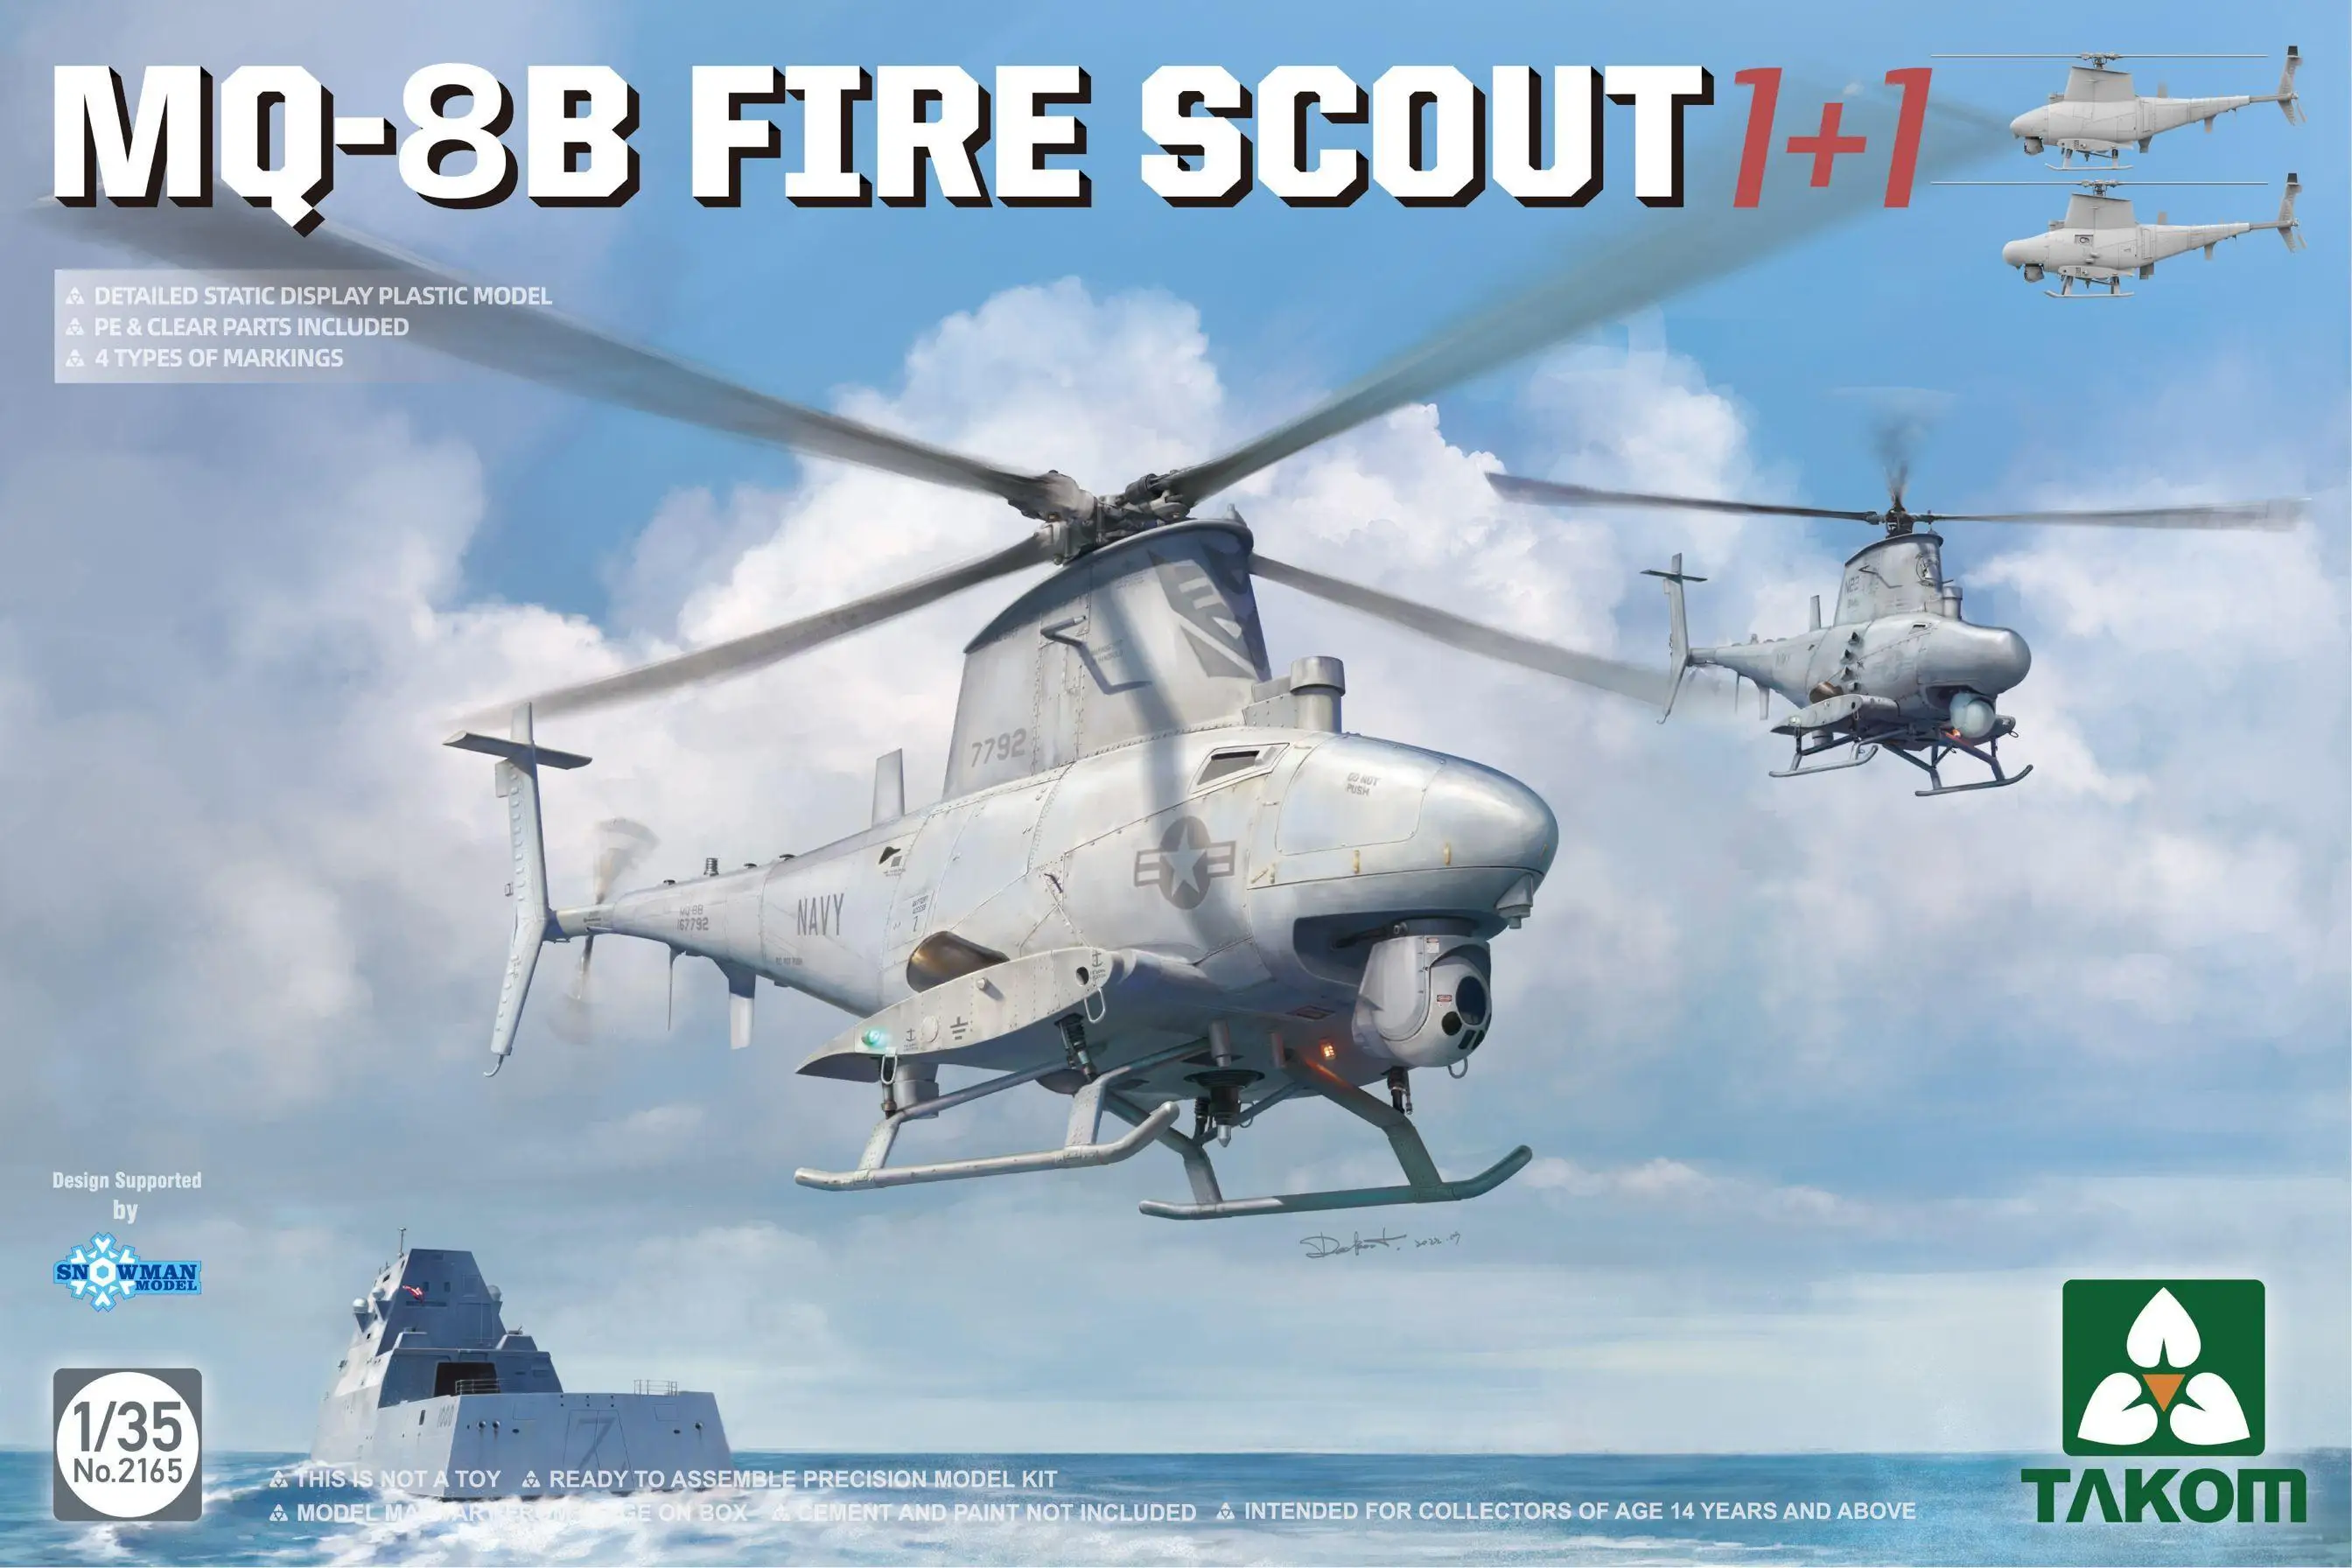 

Takom 2165 scale 1/35 MQ-8B FIRE SCOUT 1+1 model kit